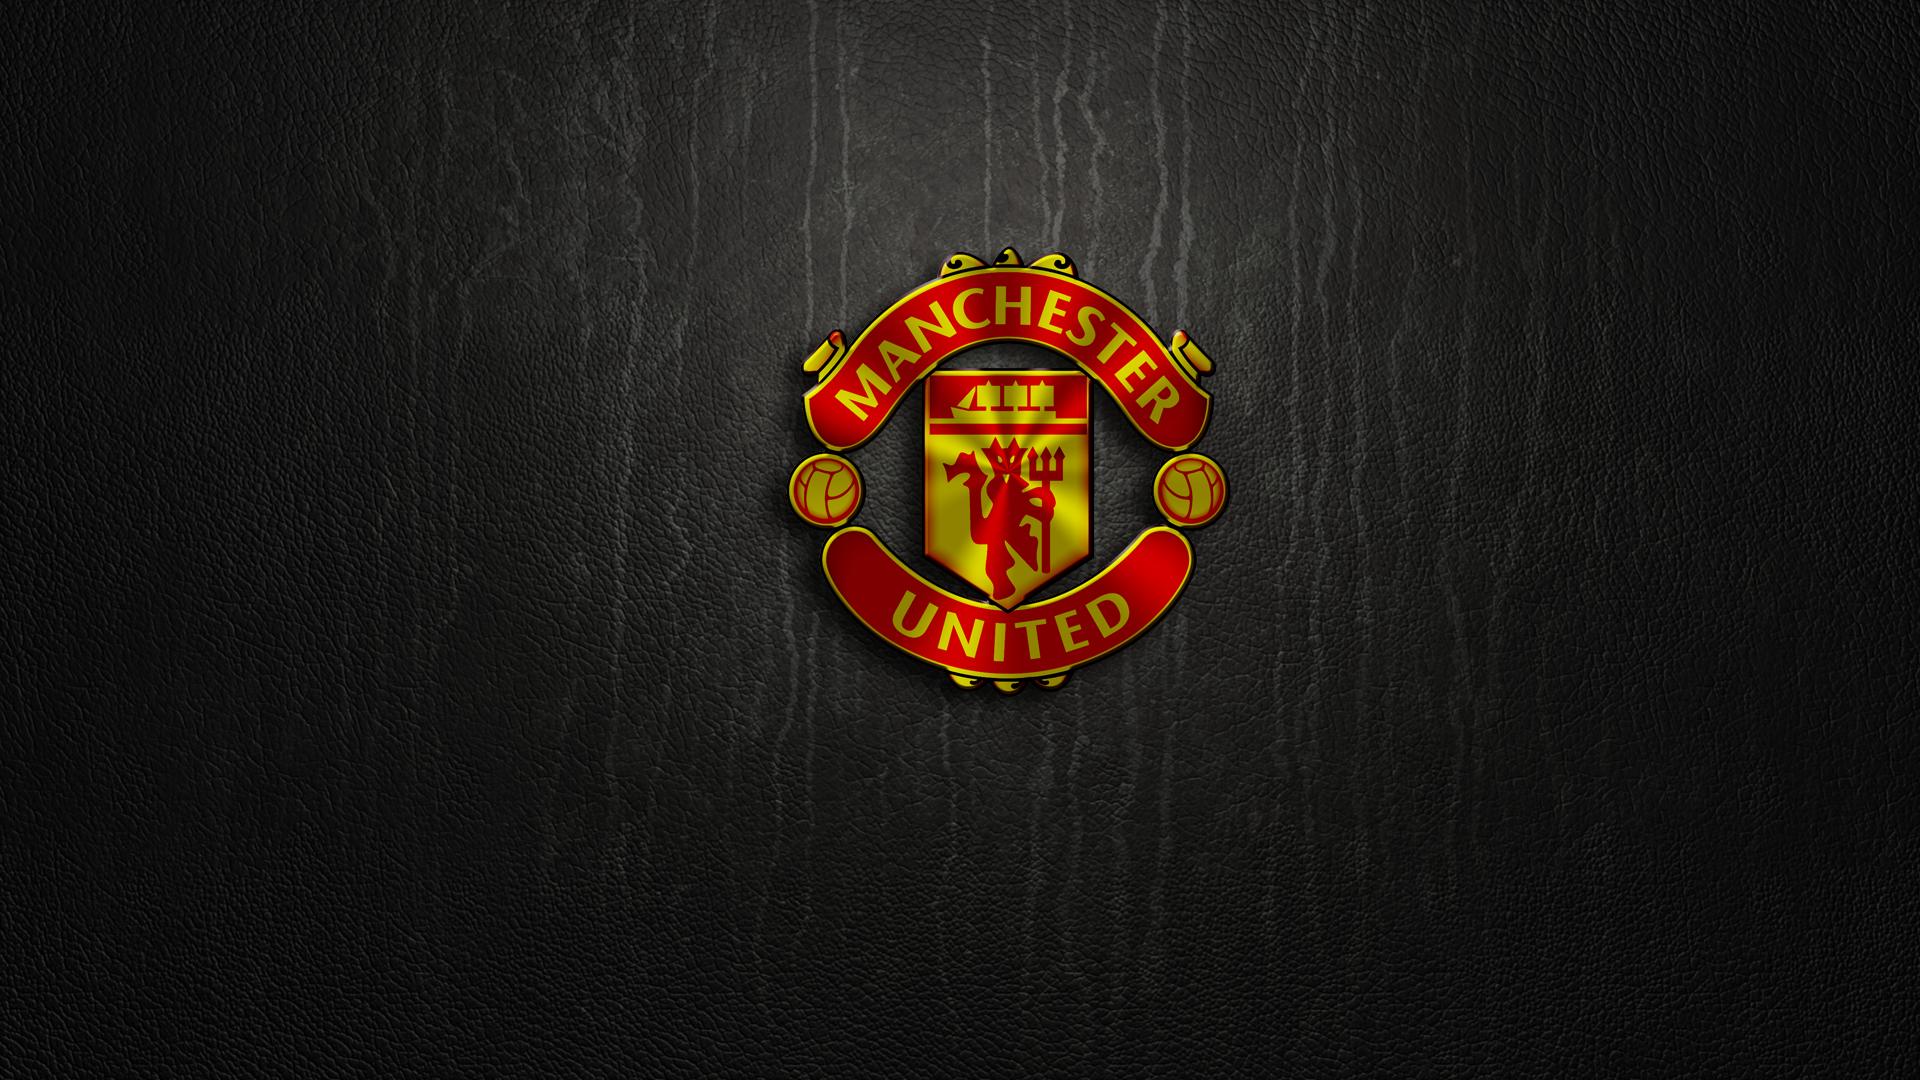 Download 21 utd-wallpapers Man-Utd-Live-Wallpaper-Logo-Manchester-United,-Hd-.jpg